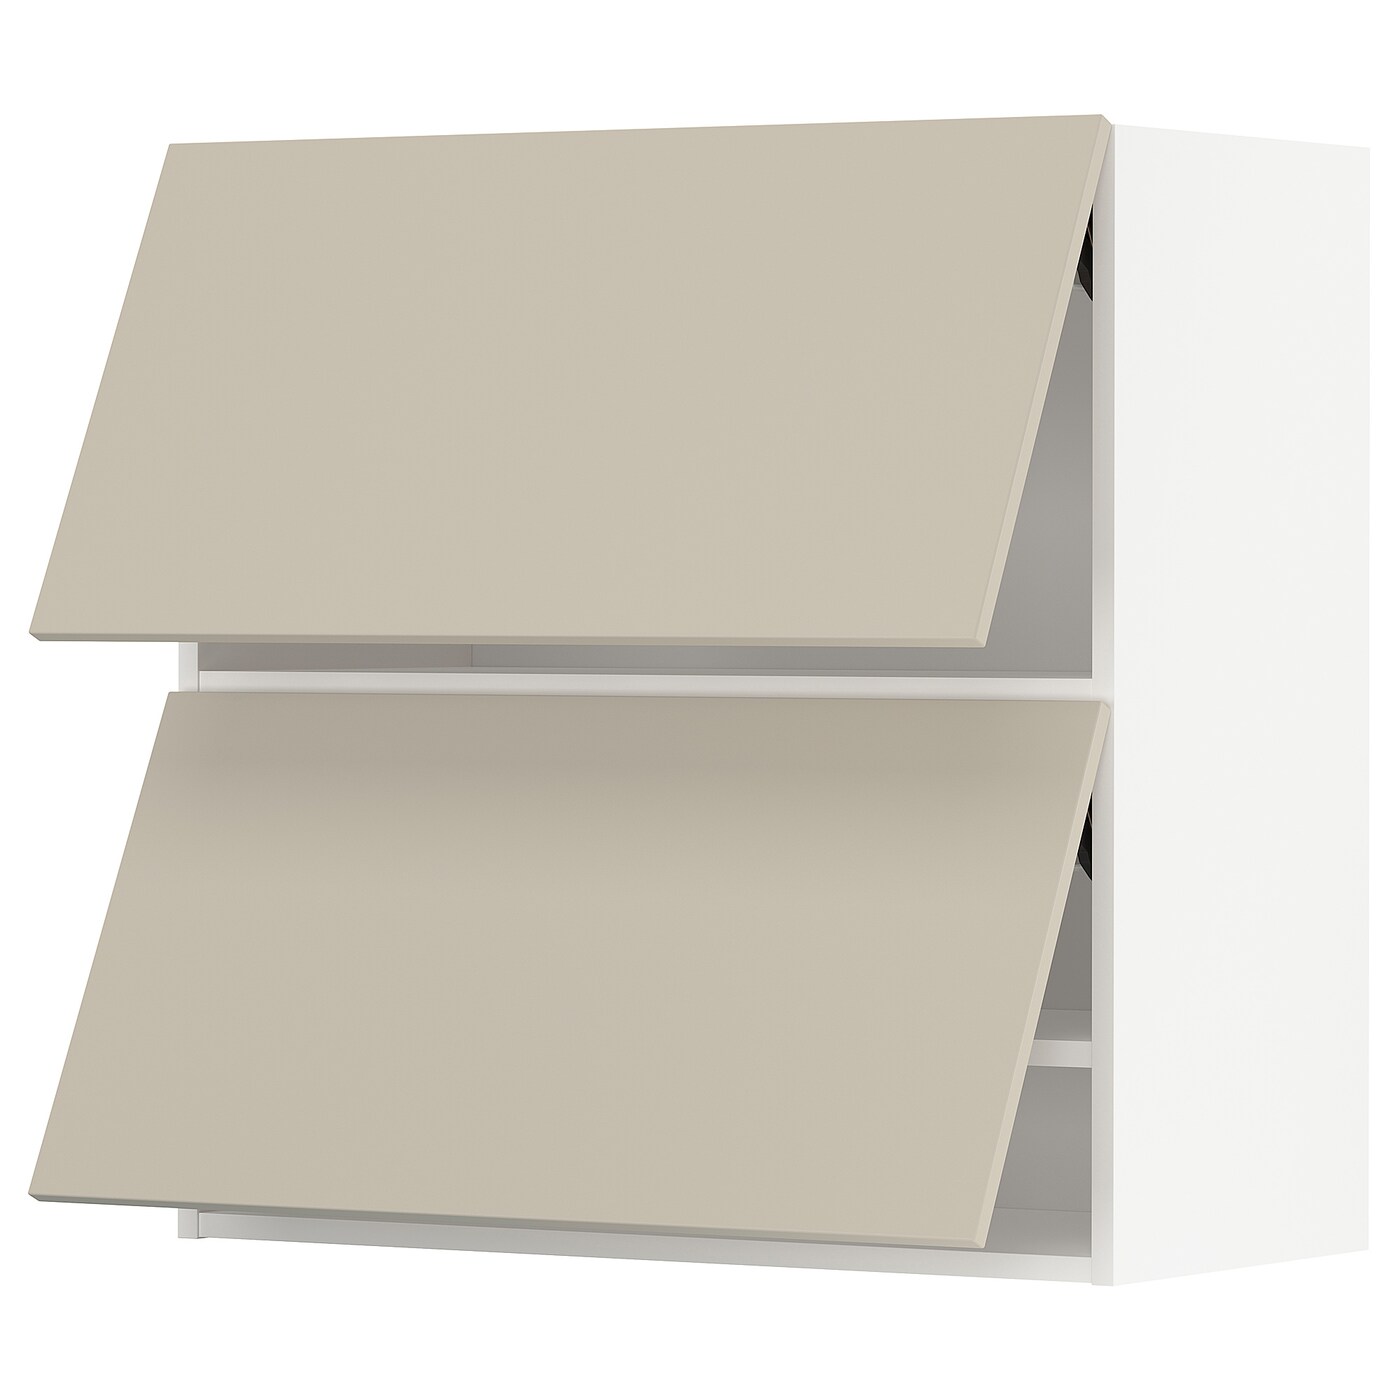 Навесной шкаф - METOD IKEA/ МЕТОД ИКЕА, 80х80 см, белый/светло-коричневый